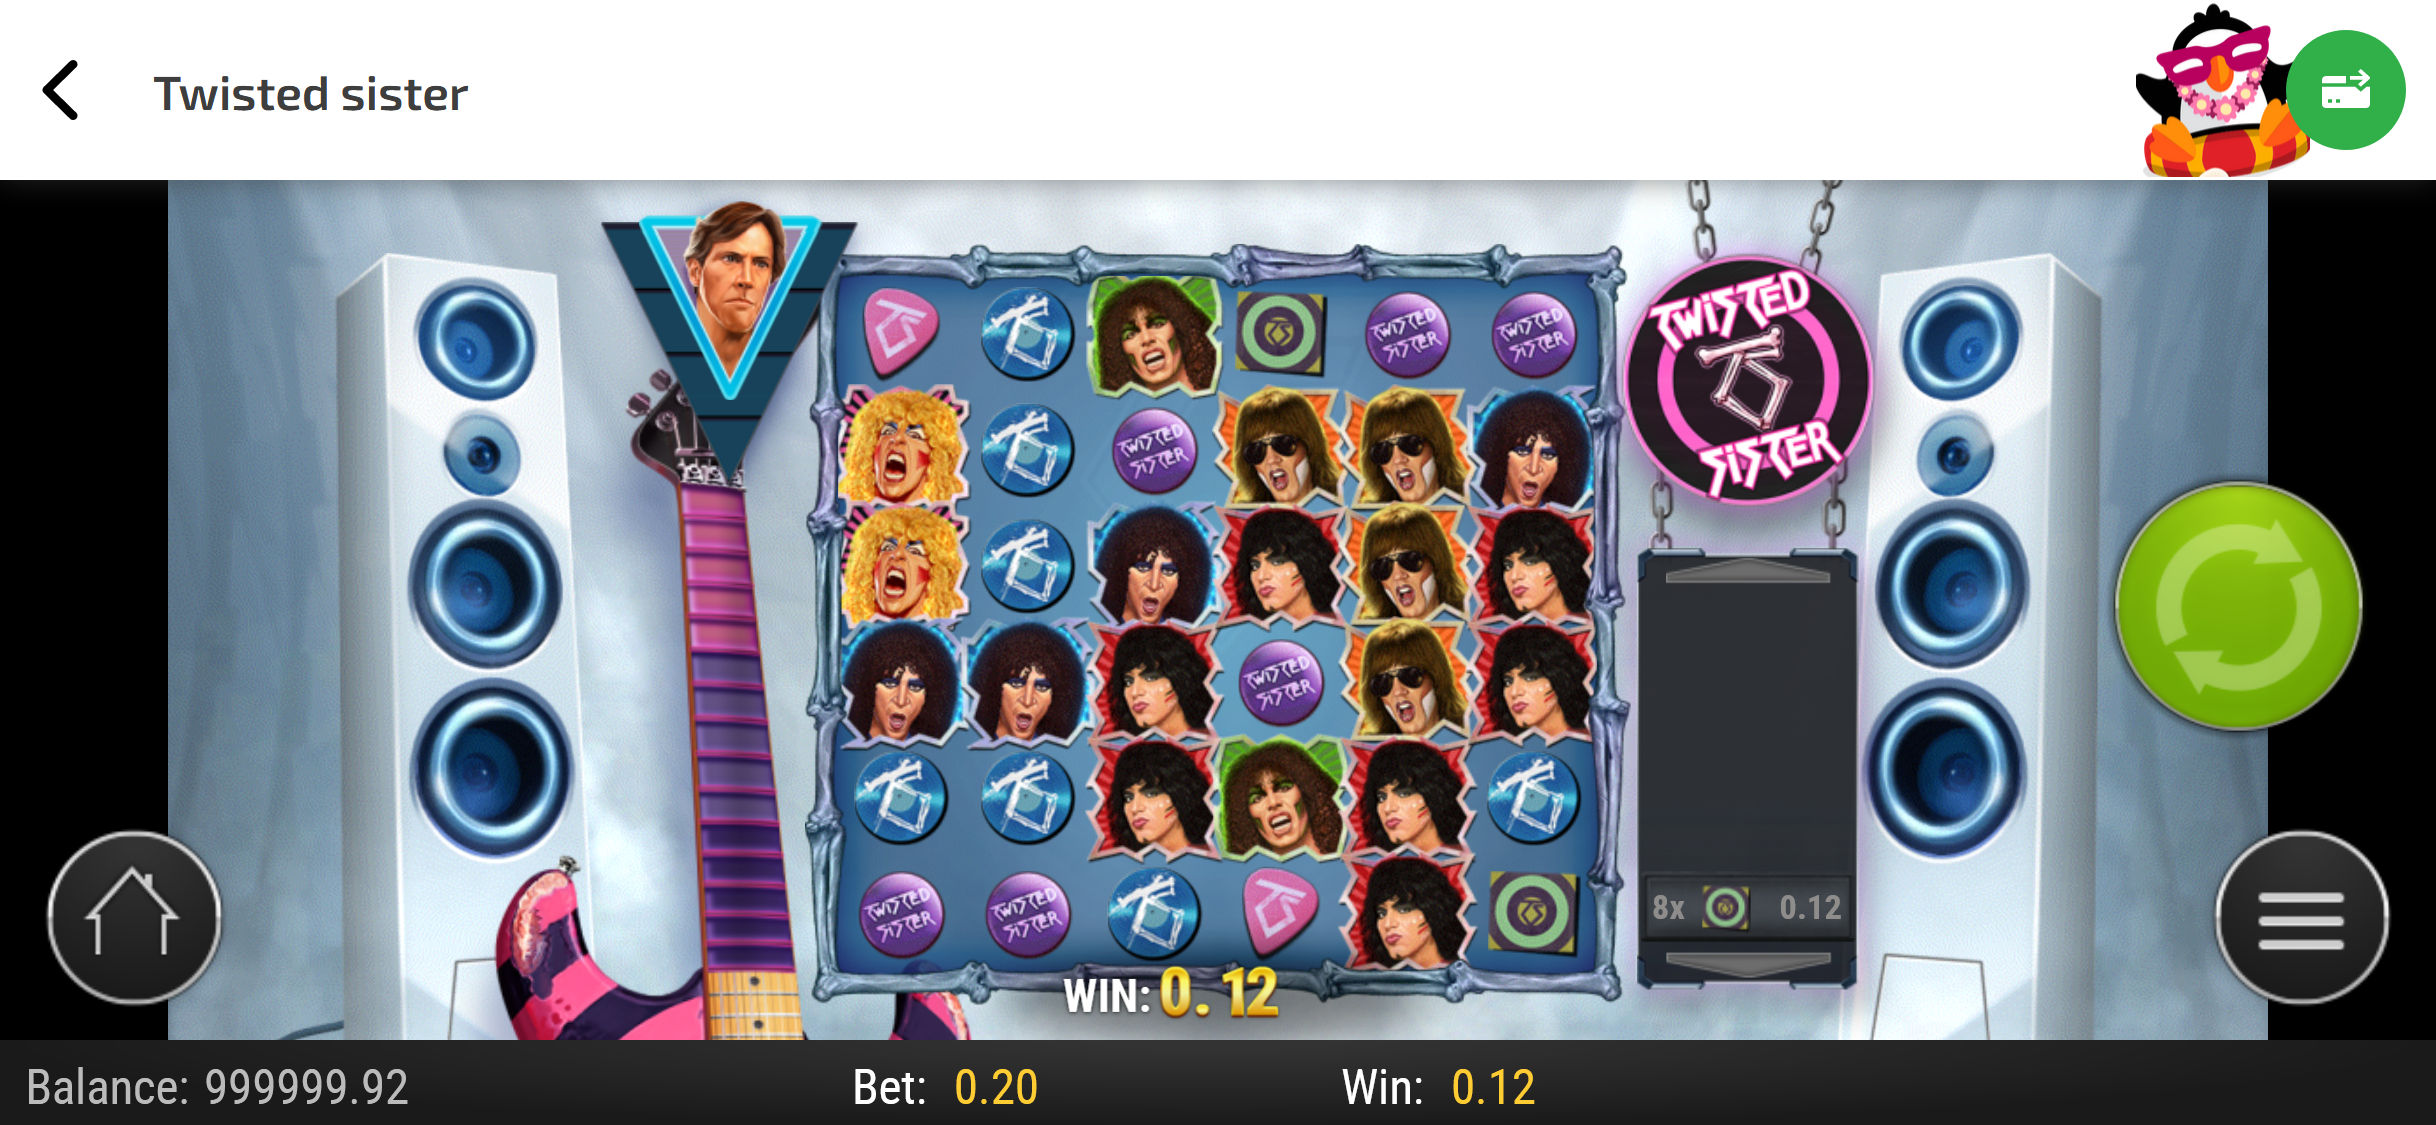 BoaBoa Casino Mobile Slot Games Review